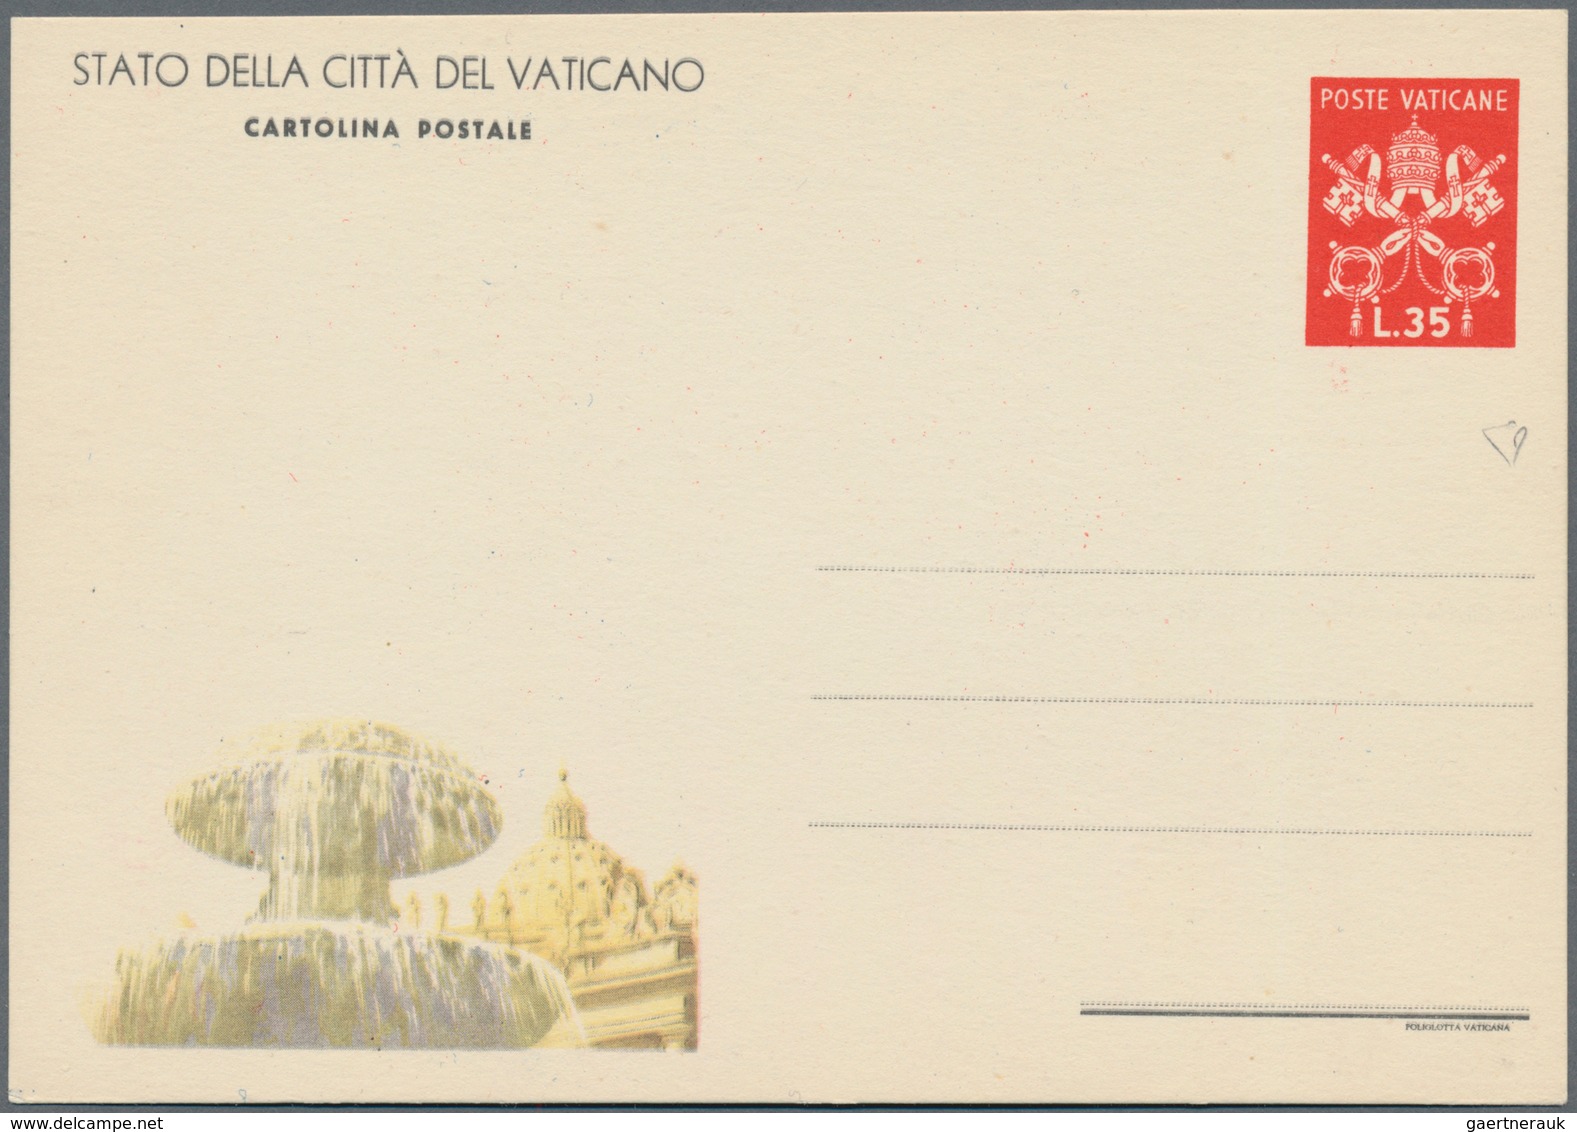 Vatikan - Ganzsachen: 1953: 35 L Postal Stationery Card Depicting The Fointain On St. Peters Square, - Ganzsachen